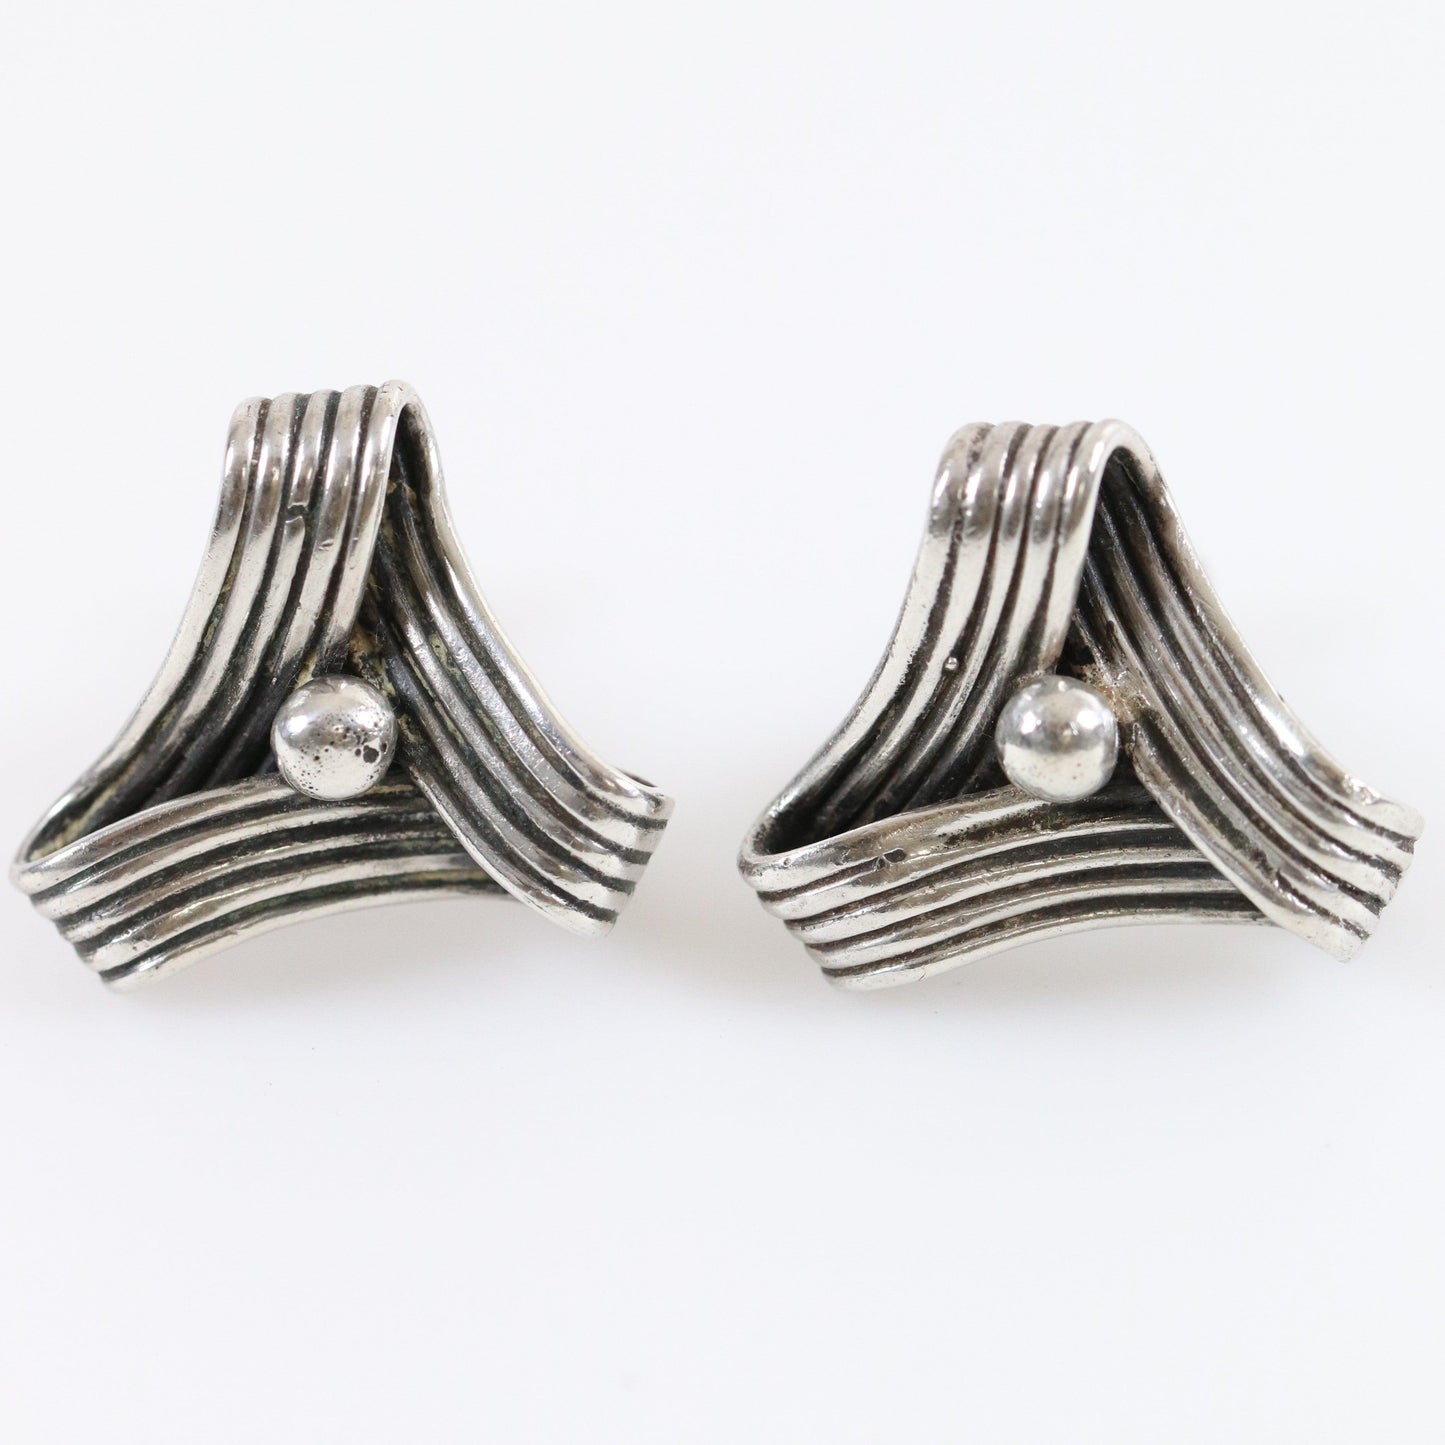 Vintage Taxco William Spratling Jewelry | Floral Ribbon Mid-Century Earrings - Carmel Fine Silver Jewelry